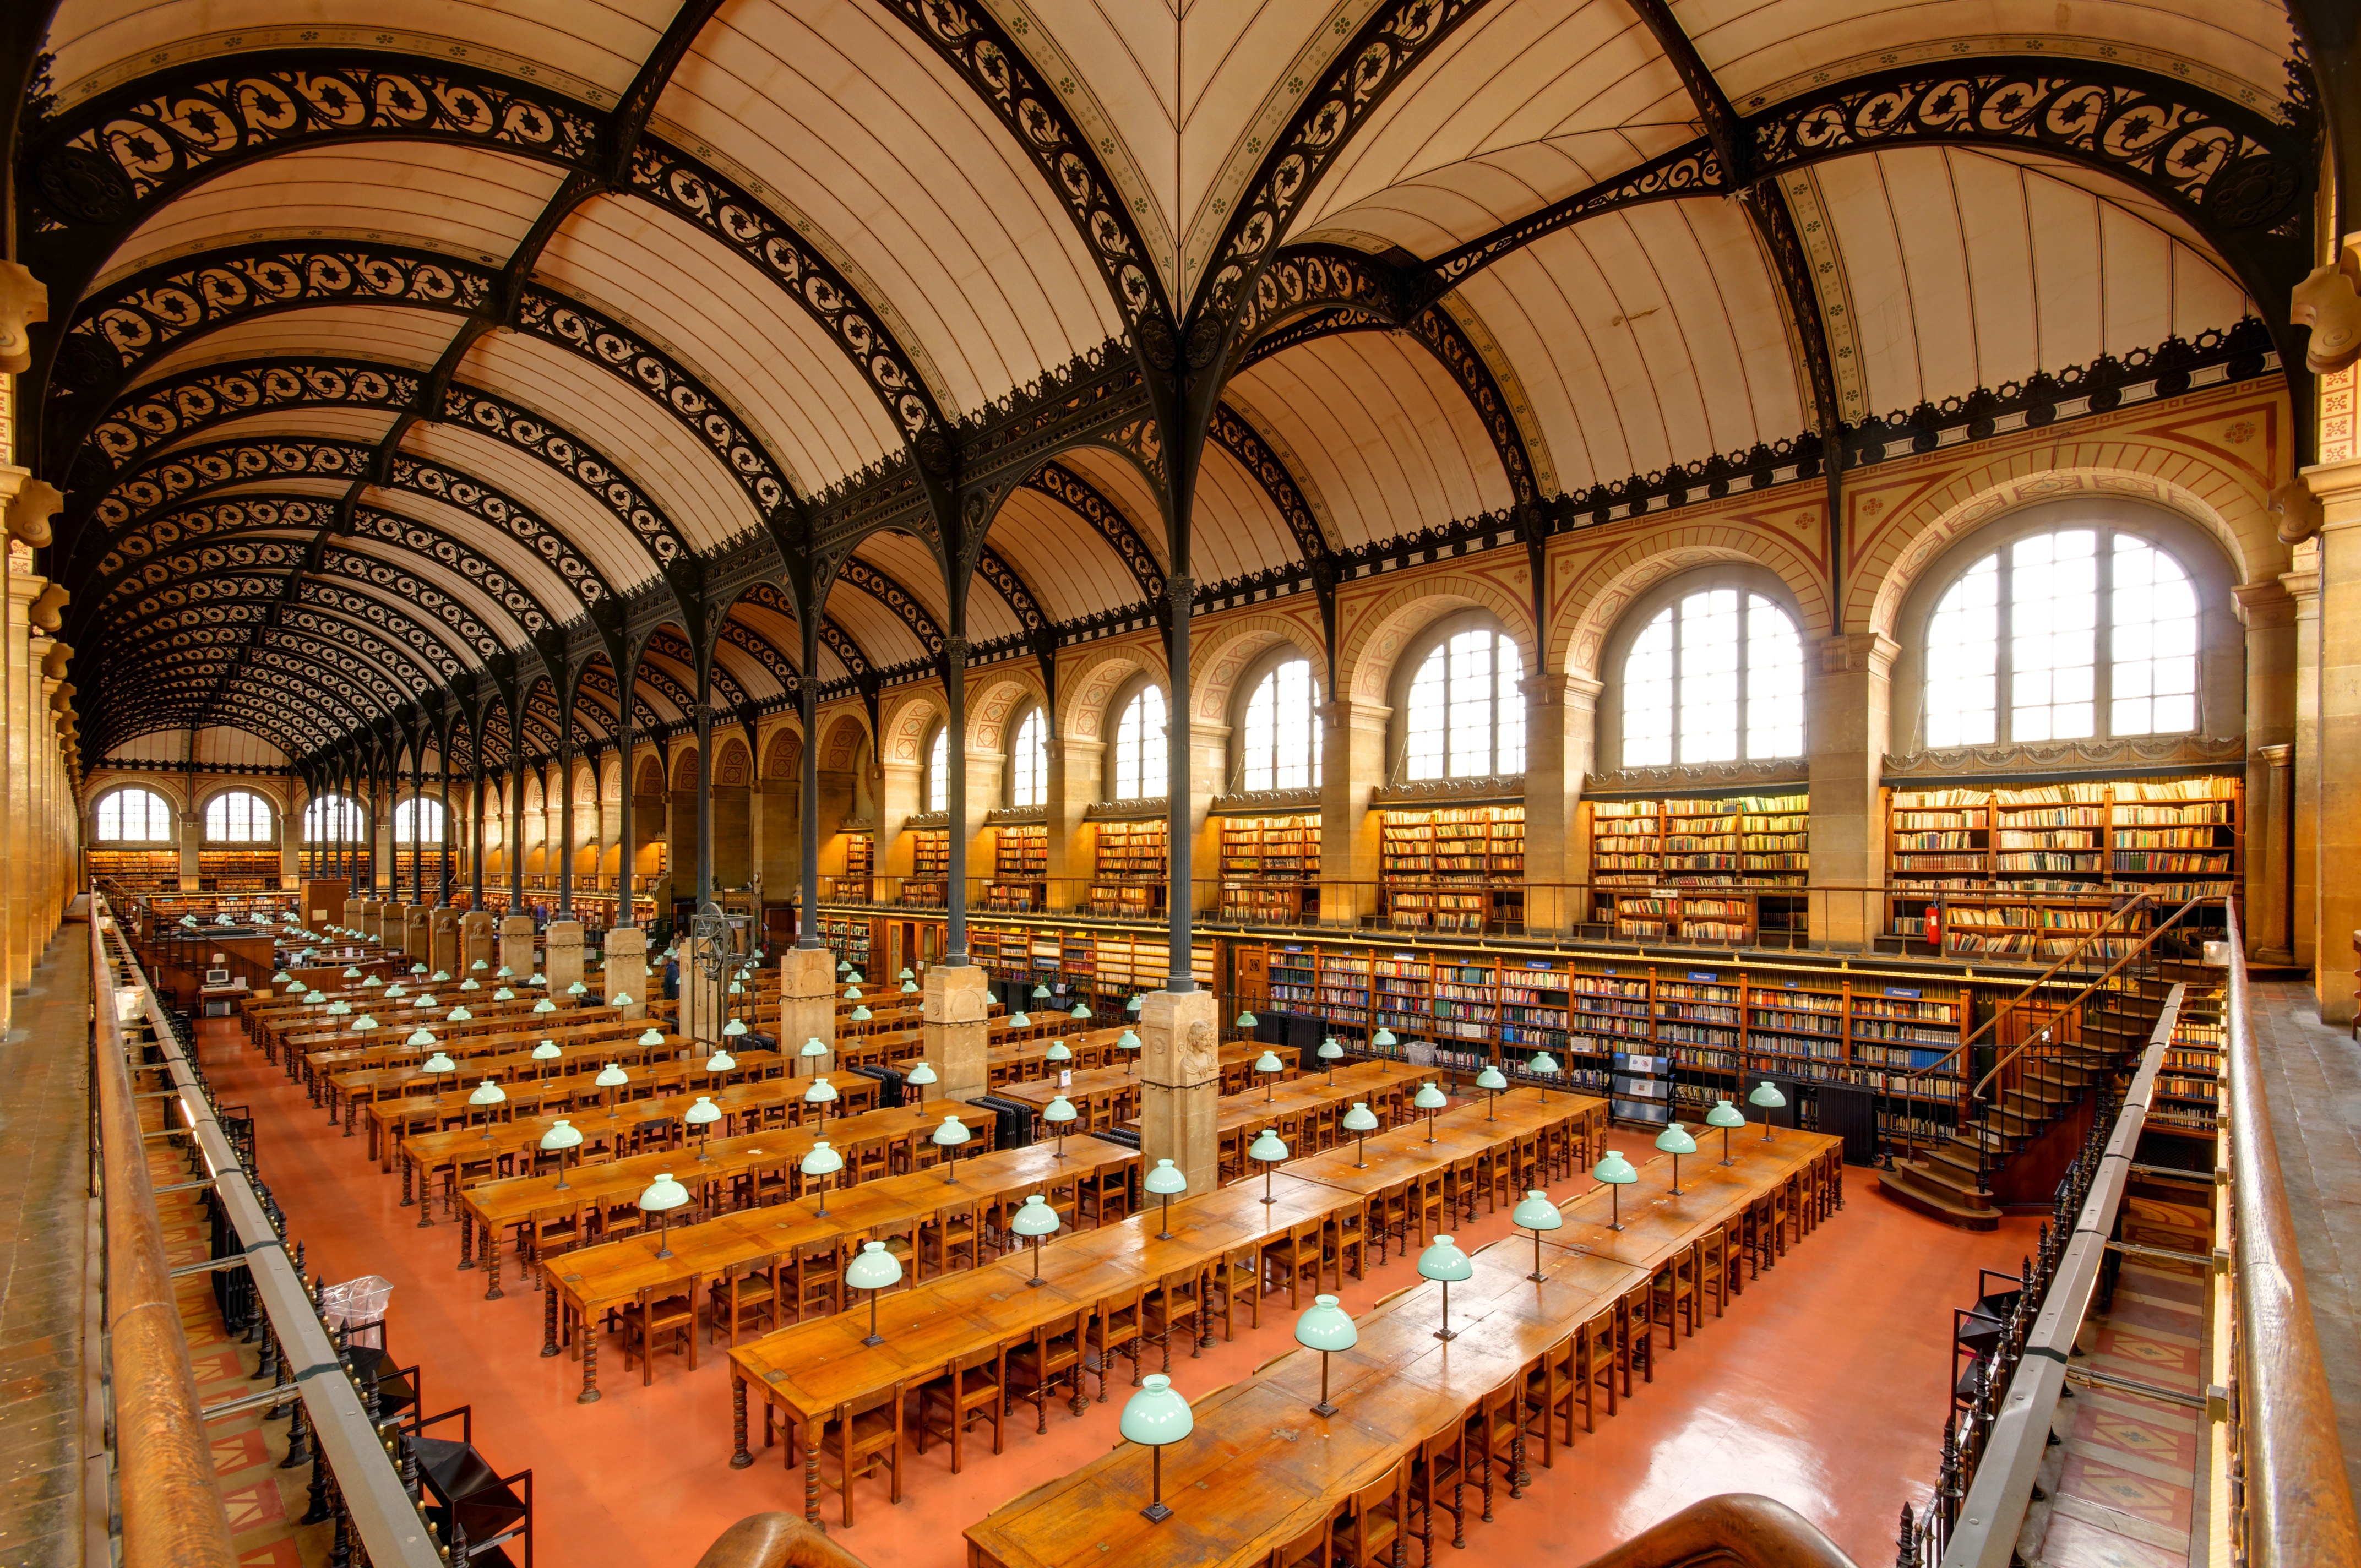 Salle de lecture Bibliotheque Sainte-Genevieve n03.jpg